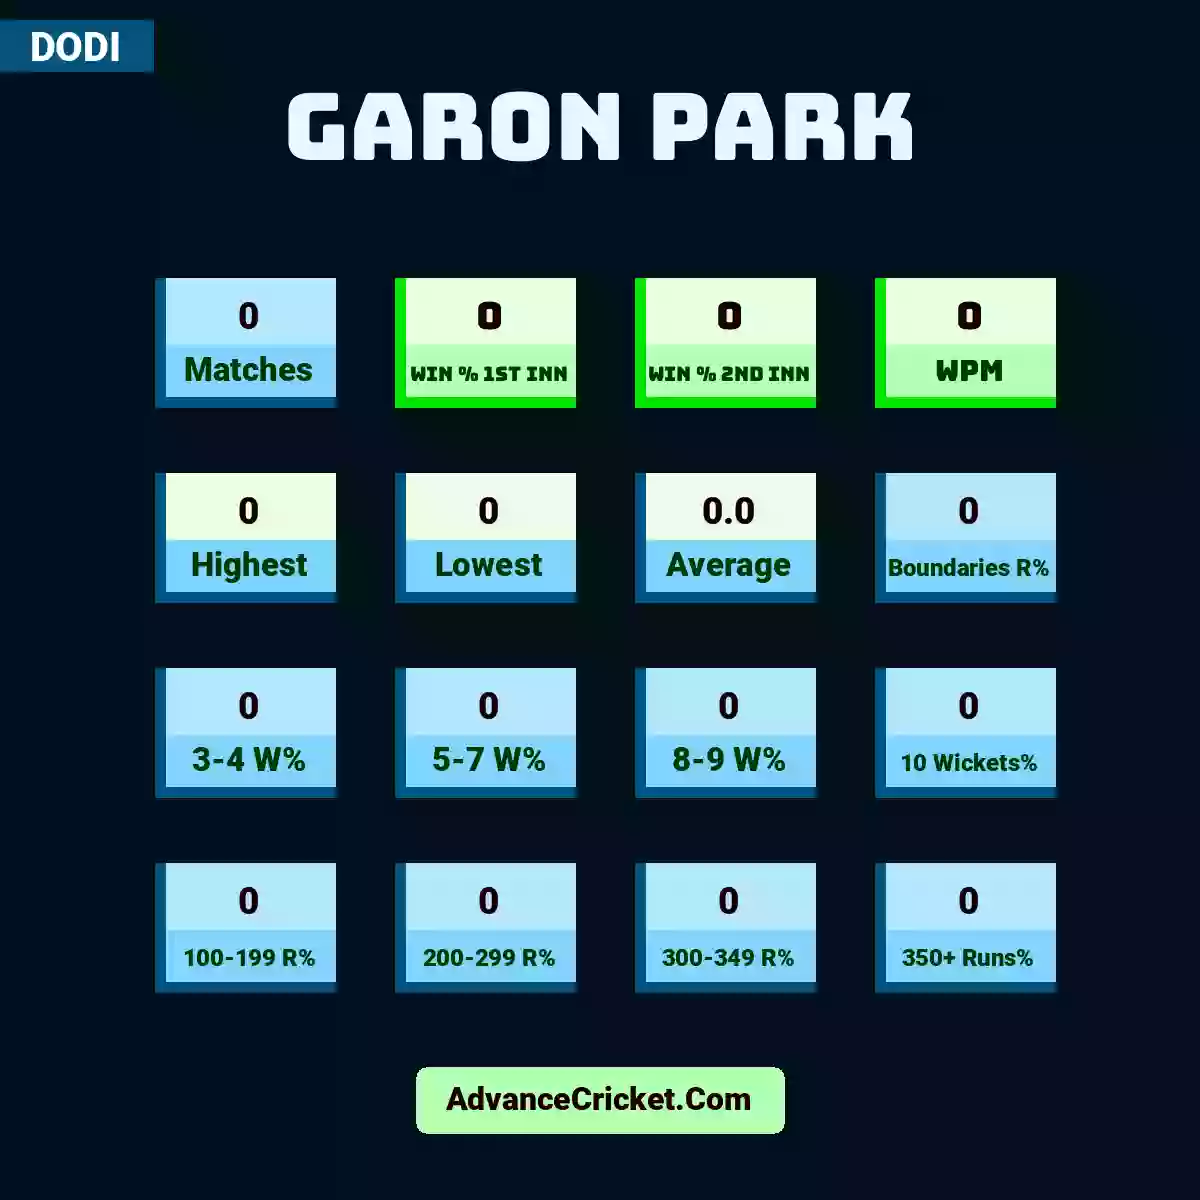 Image showing Garon Park with Matches: 0, Win % 1st Inn: 0, Win % 2nd Inn: 0, WPM: 0, Highest: 0, Lowest: 0, Average: 0.0, Boundaries R%: 0, 3-4 W%: 0, 5-7 W%: 0, 8-9 W%: 0, 10 Wickets%: 0, 100-199 R%: 0, 200-299 R%: 0, 300-349 R%: 0, 350+ Runs%: 0.